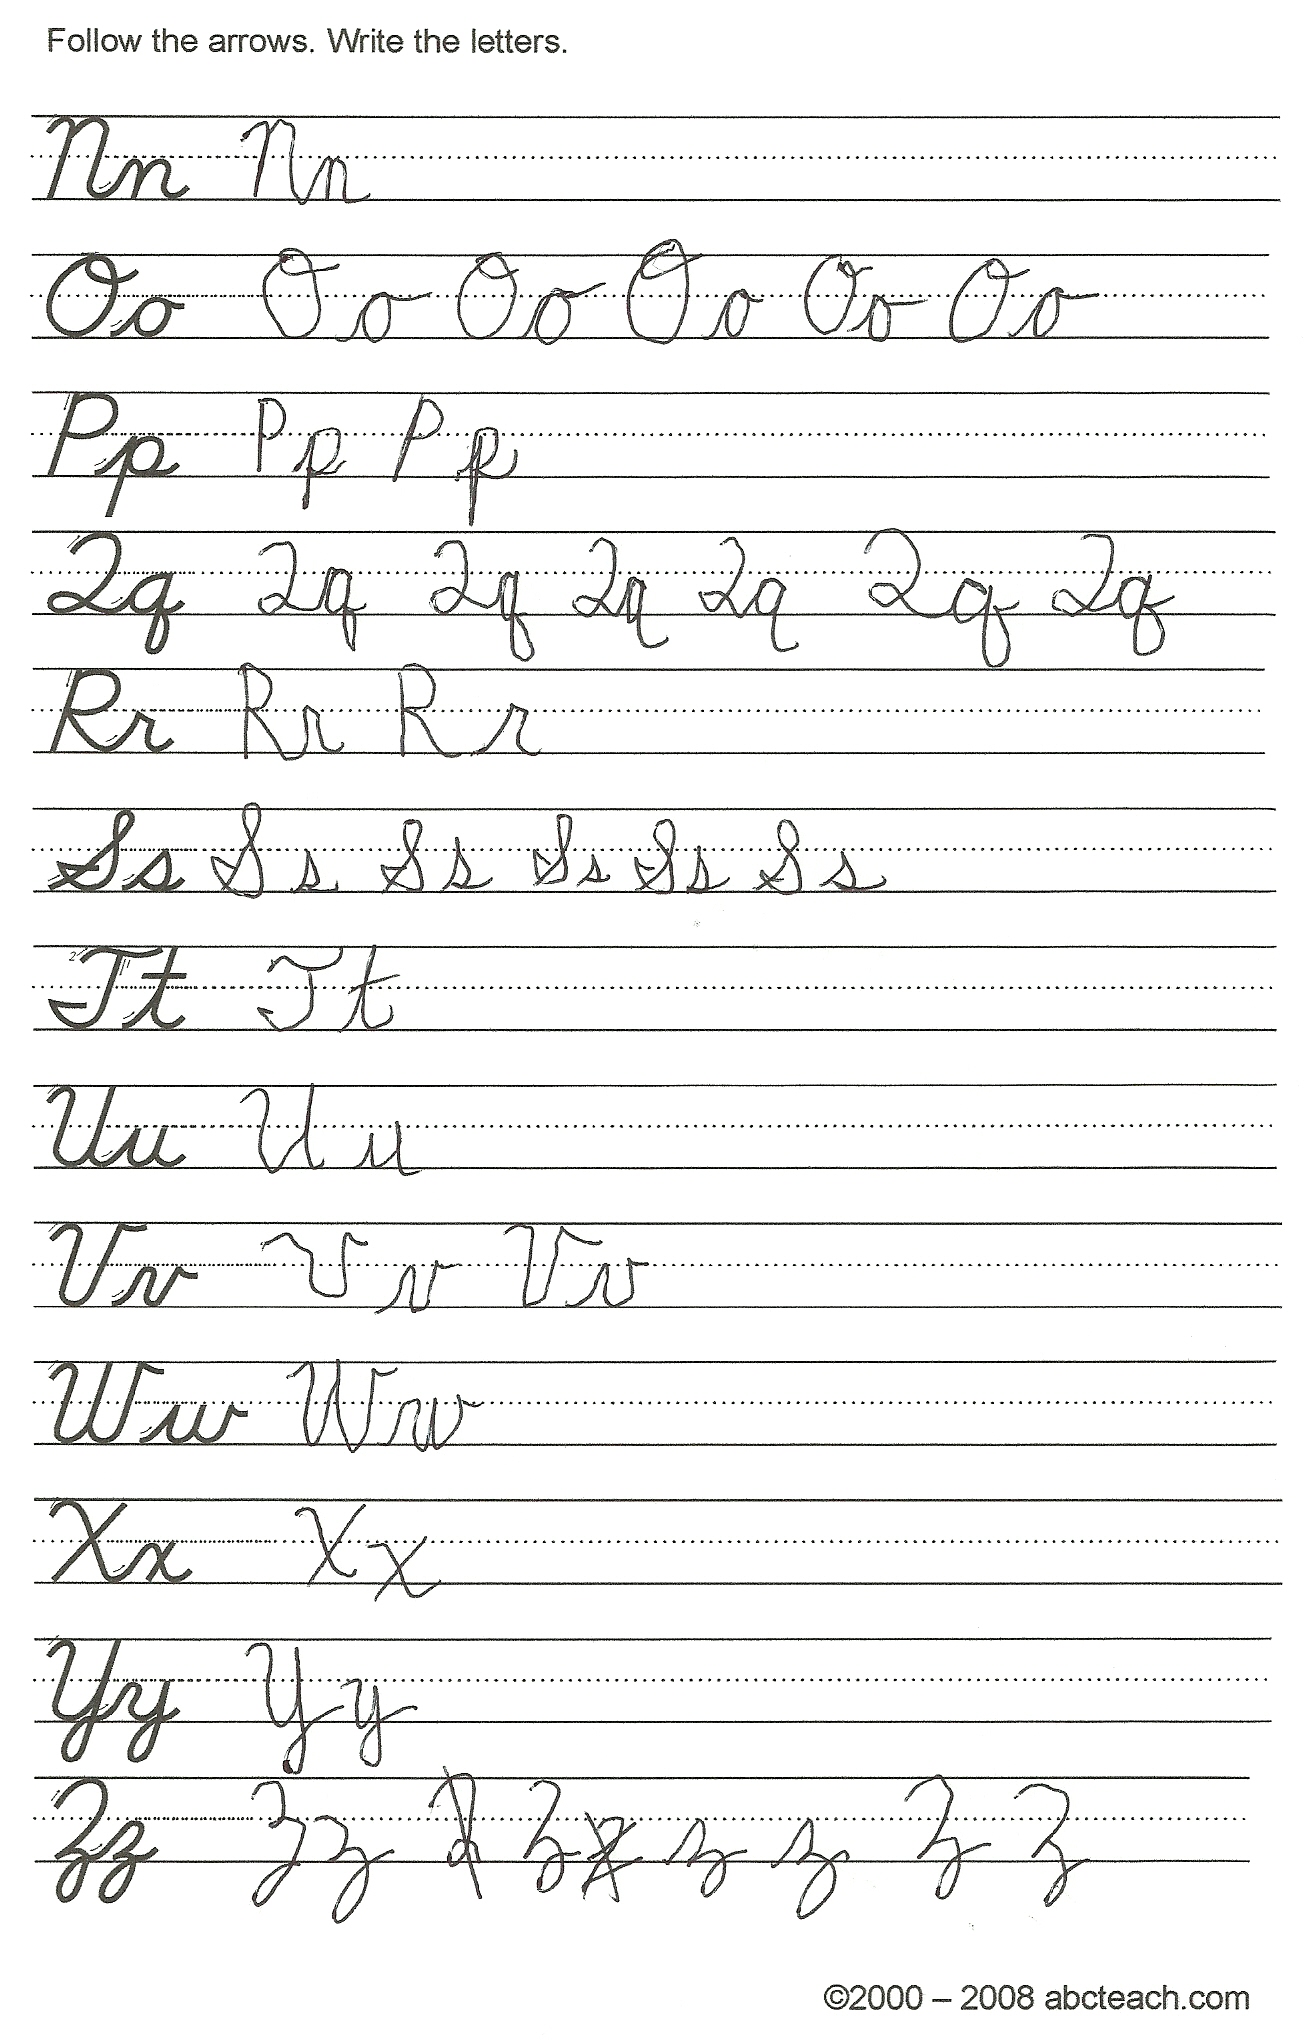 name-tracing-practice-cursive-alphabetworksheetsfree